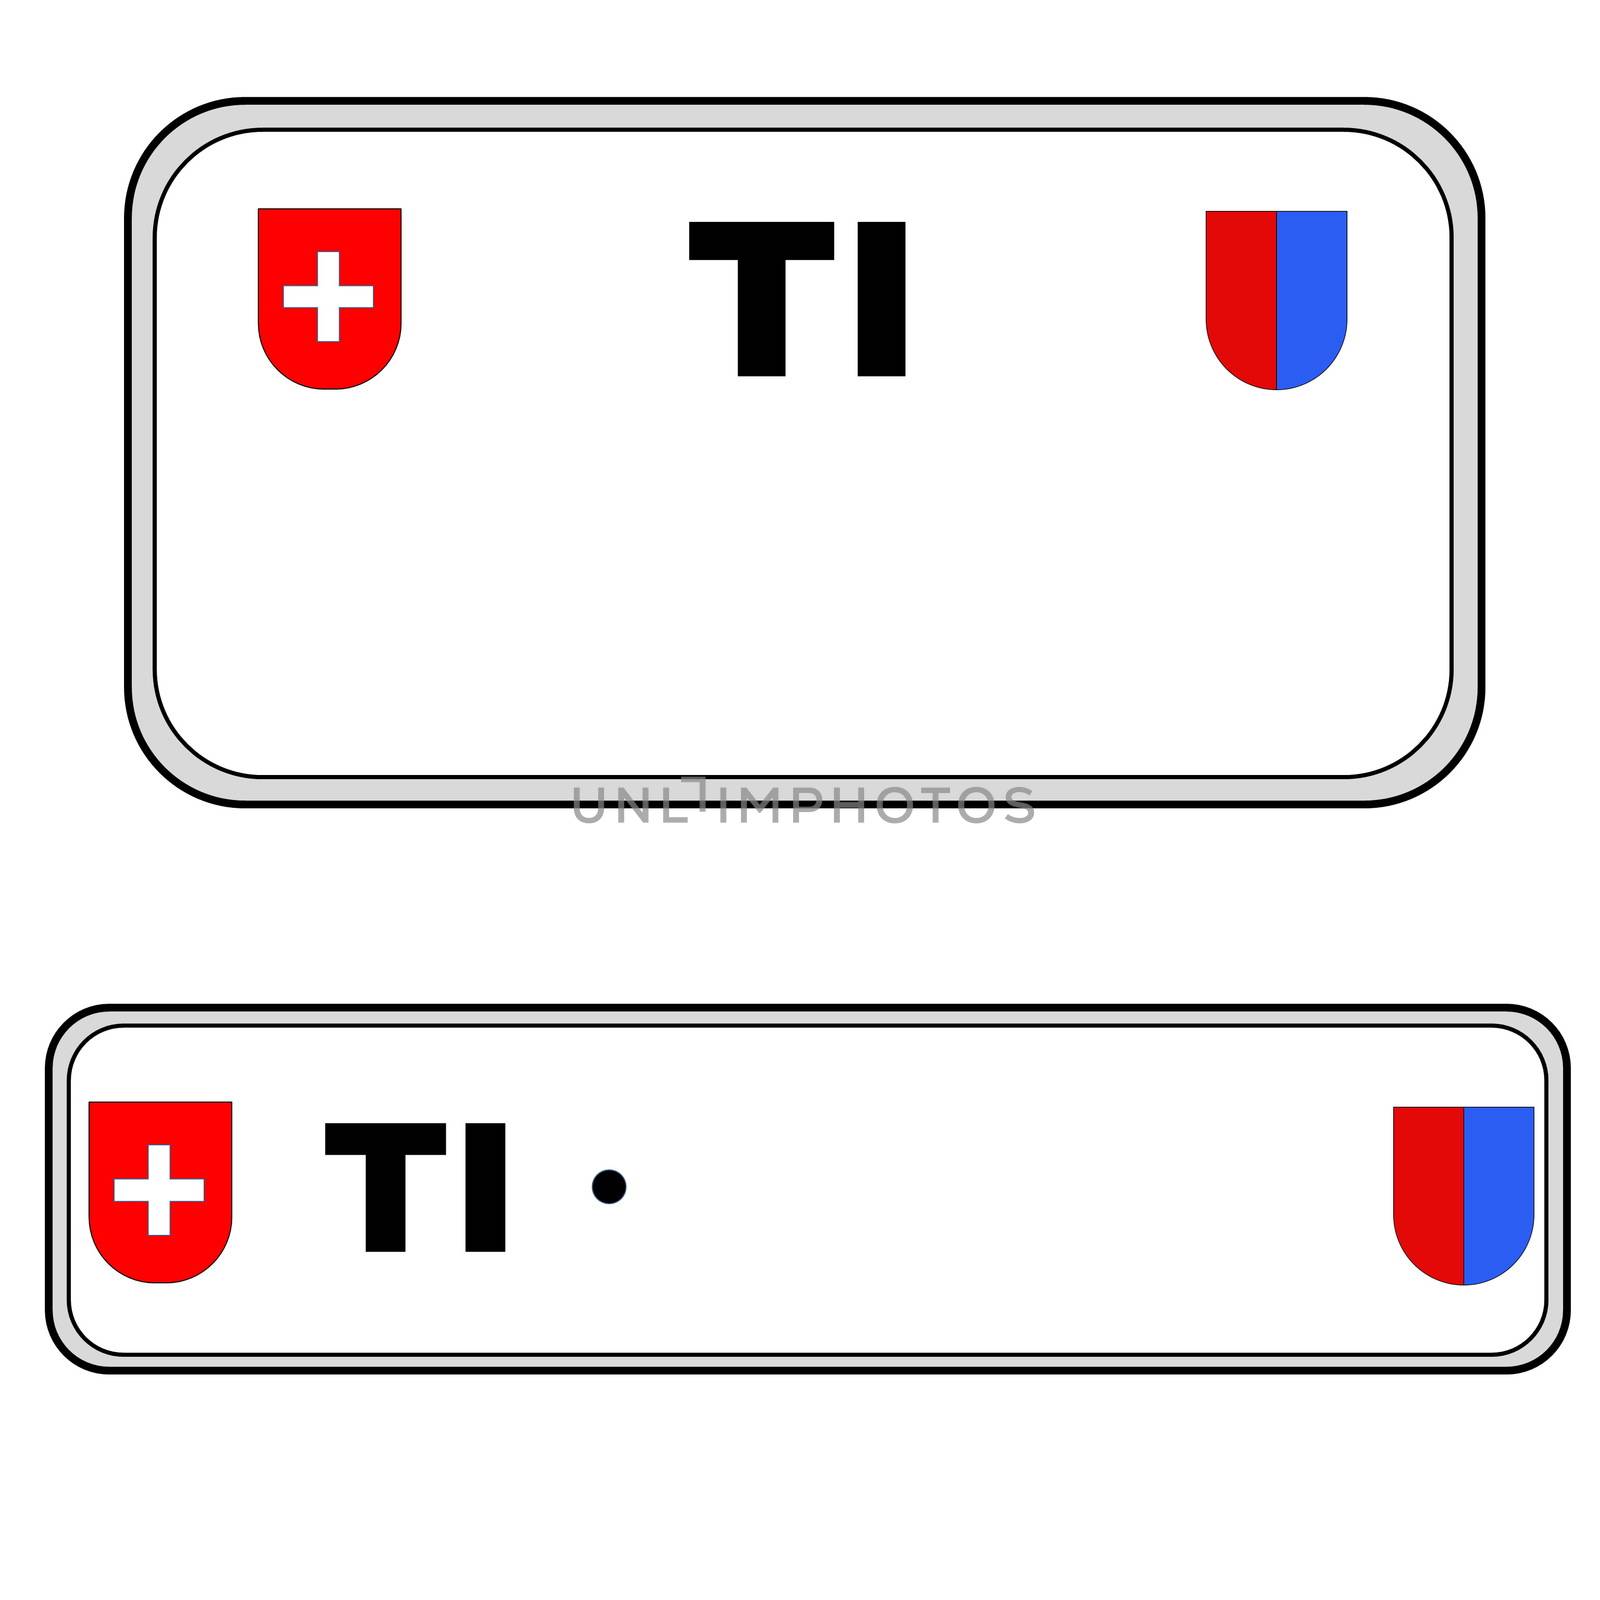 Ticino plate number, Switzerland by Elenaphotos21